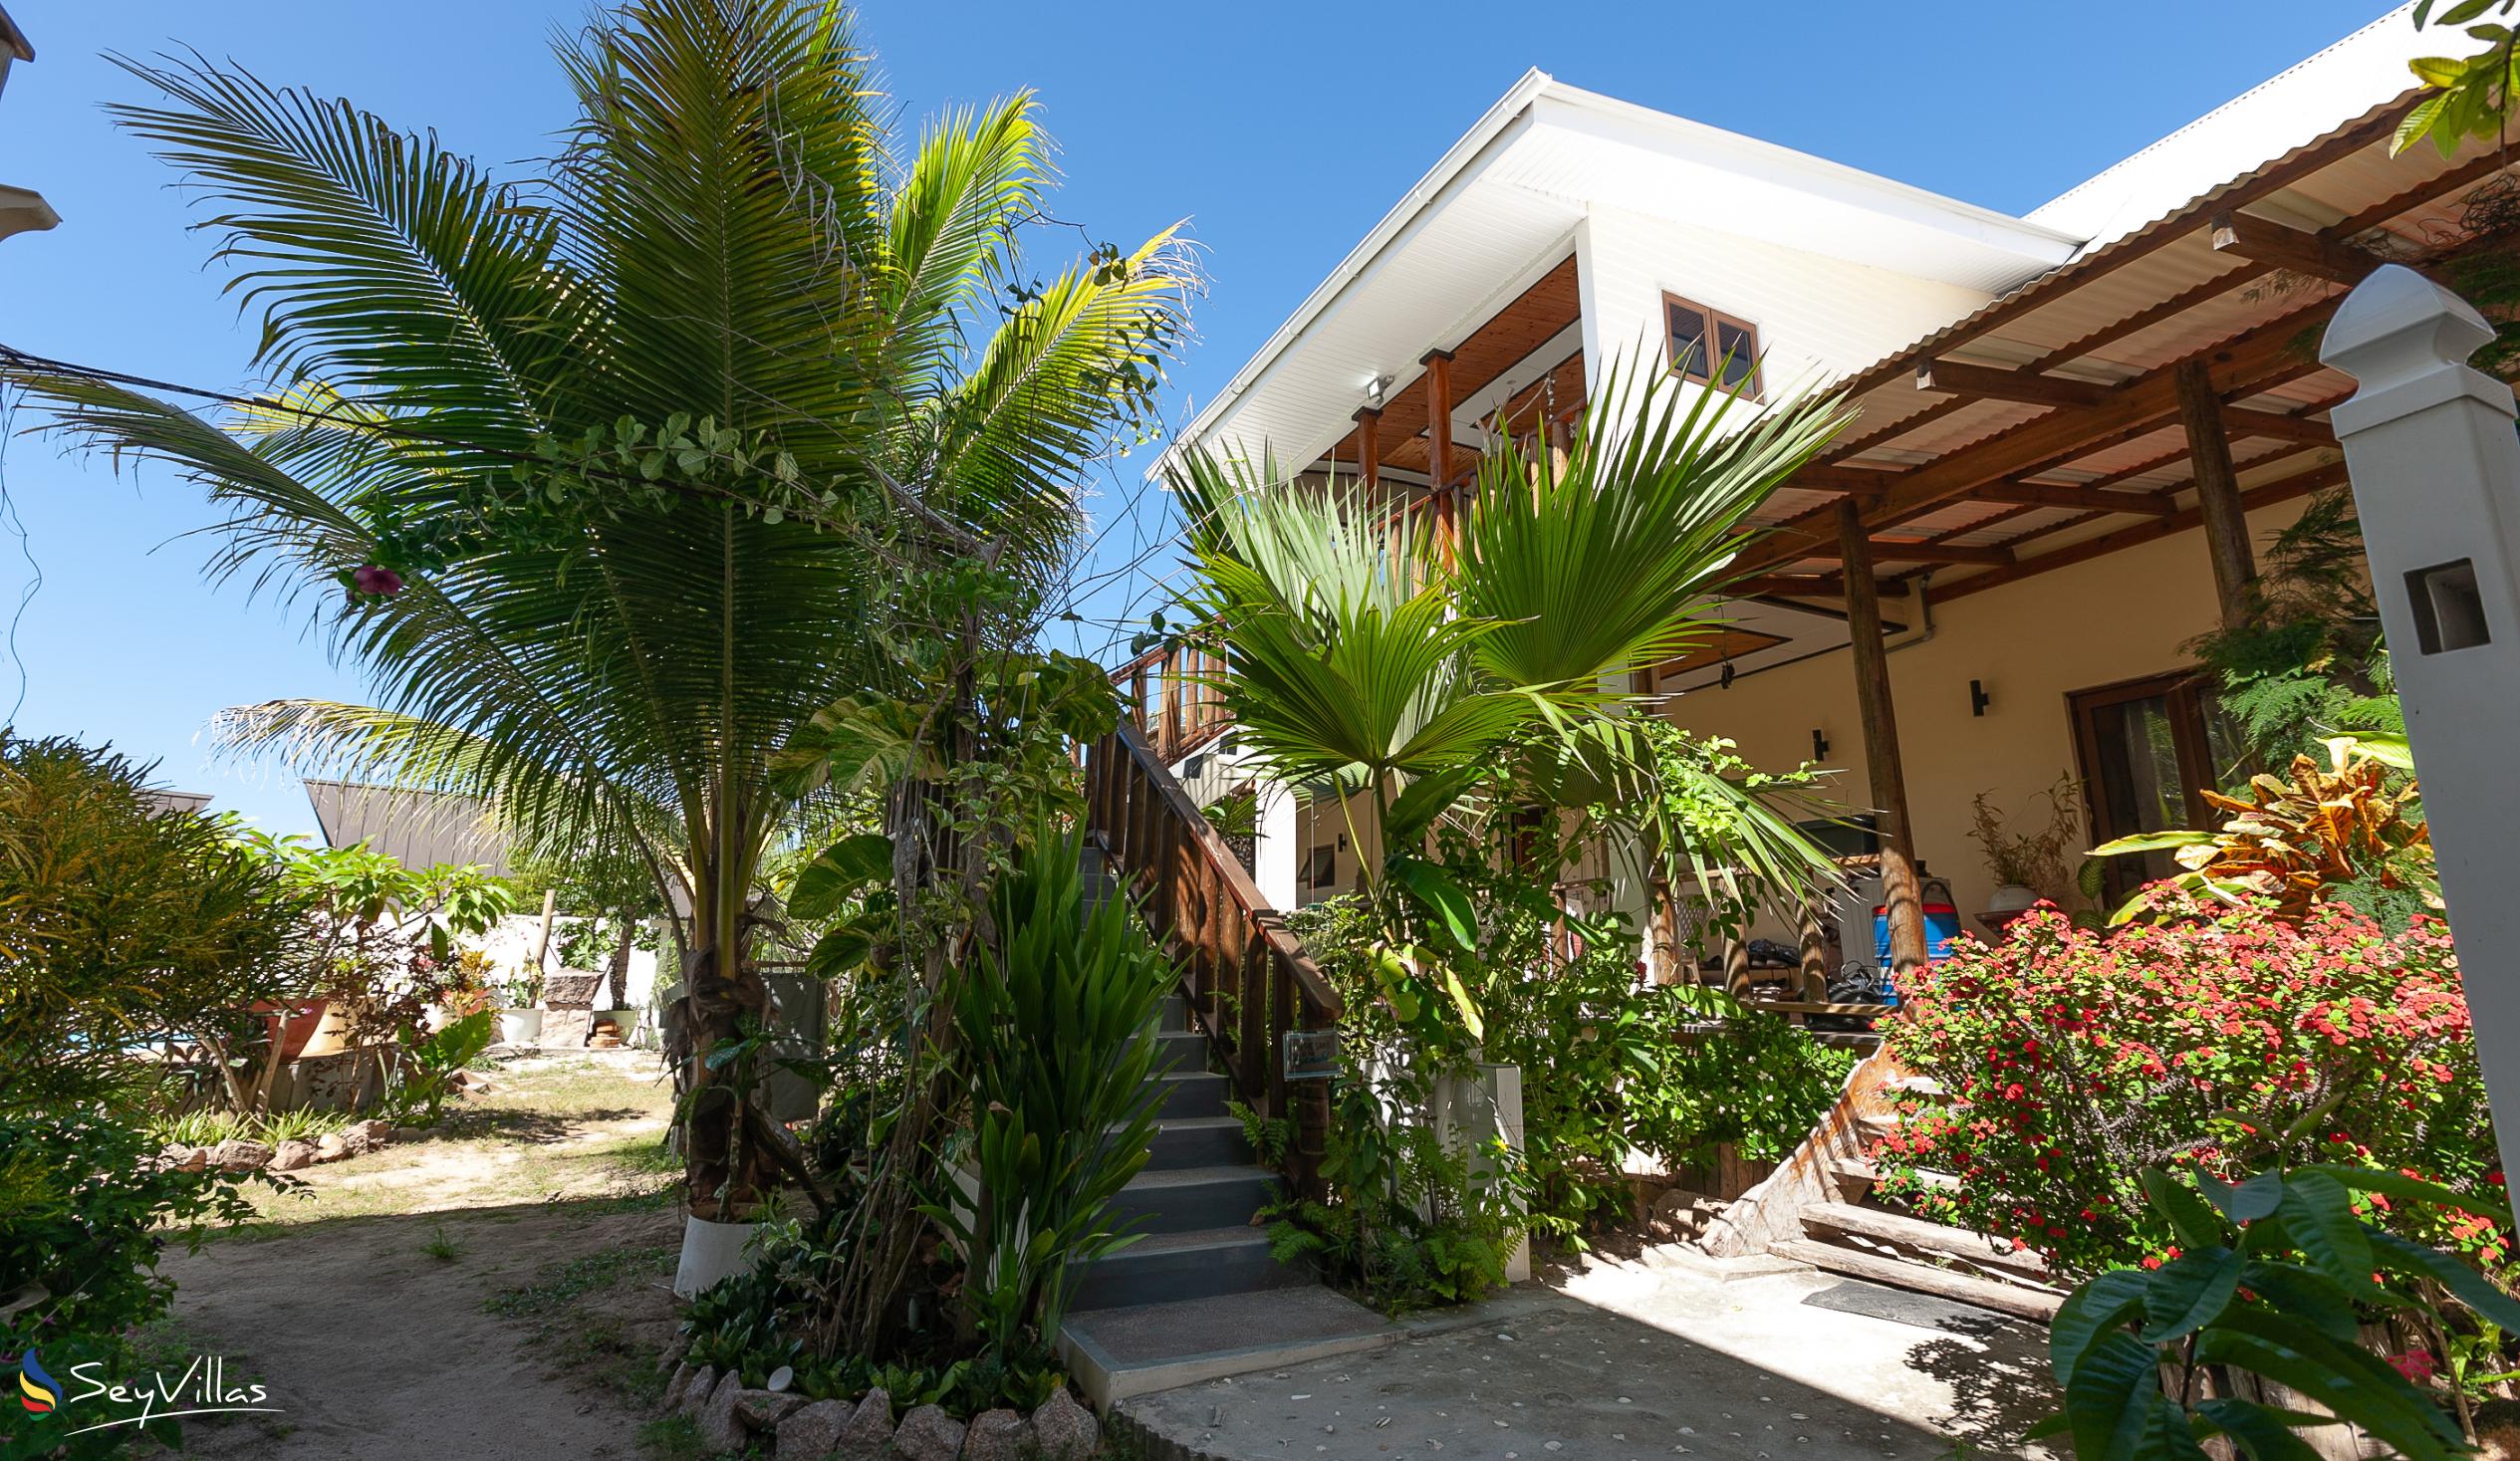 Photo 2: Hyde-Tide Guesthouse - Outdoor area - La Digue (Seychelles)